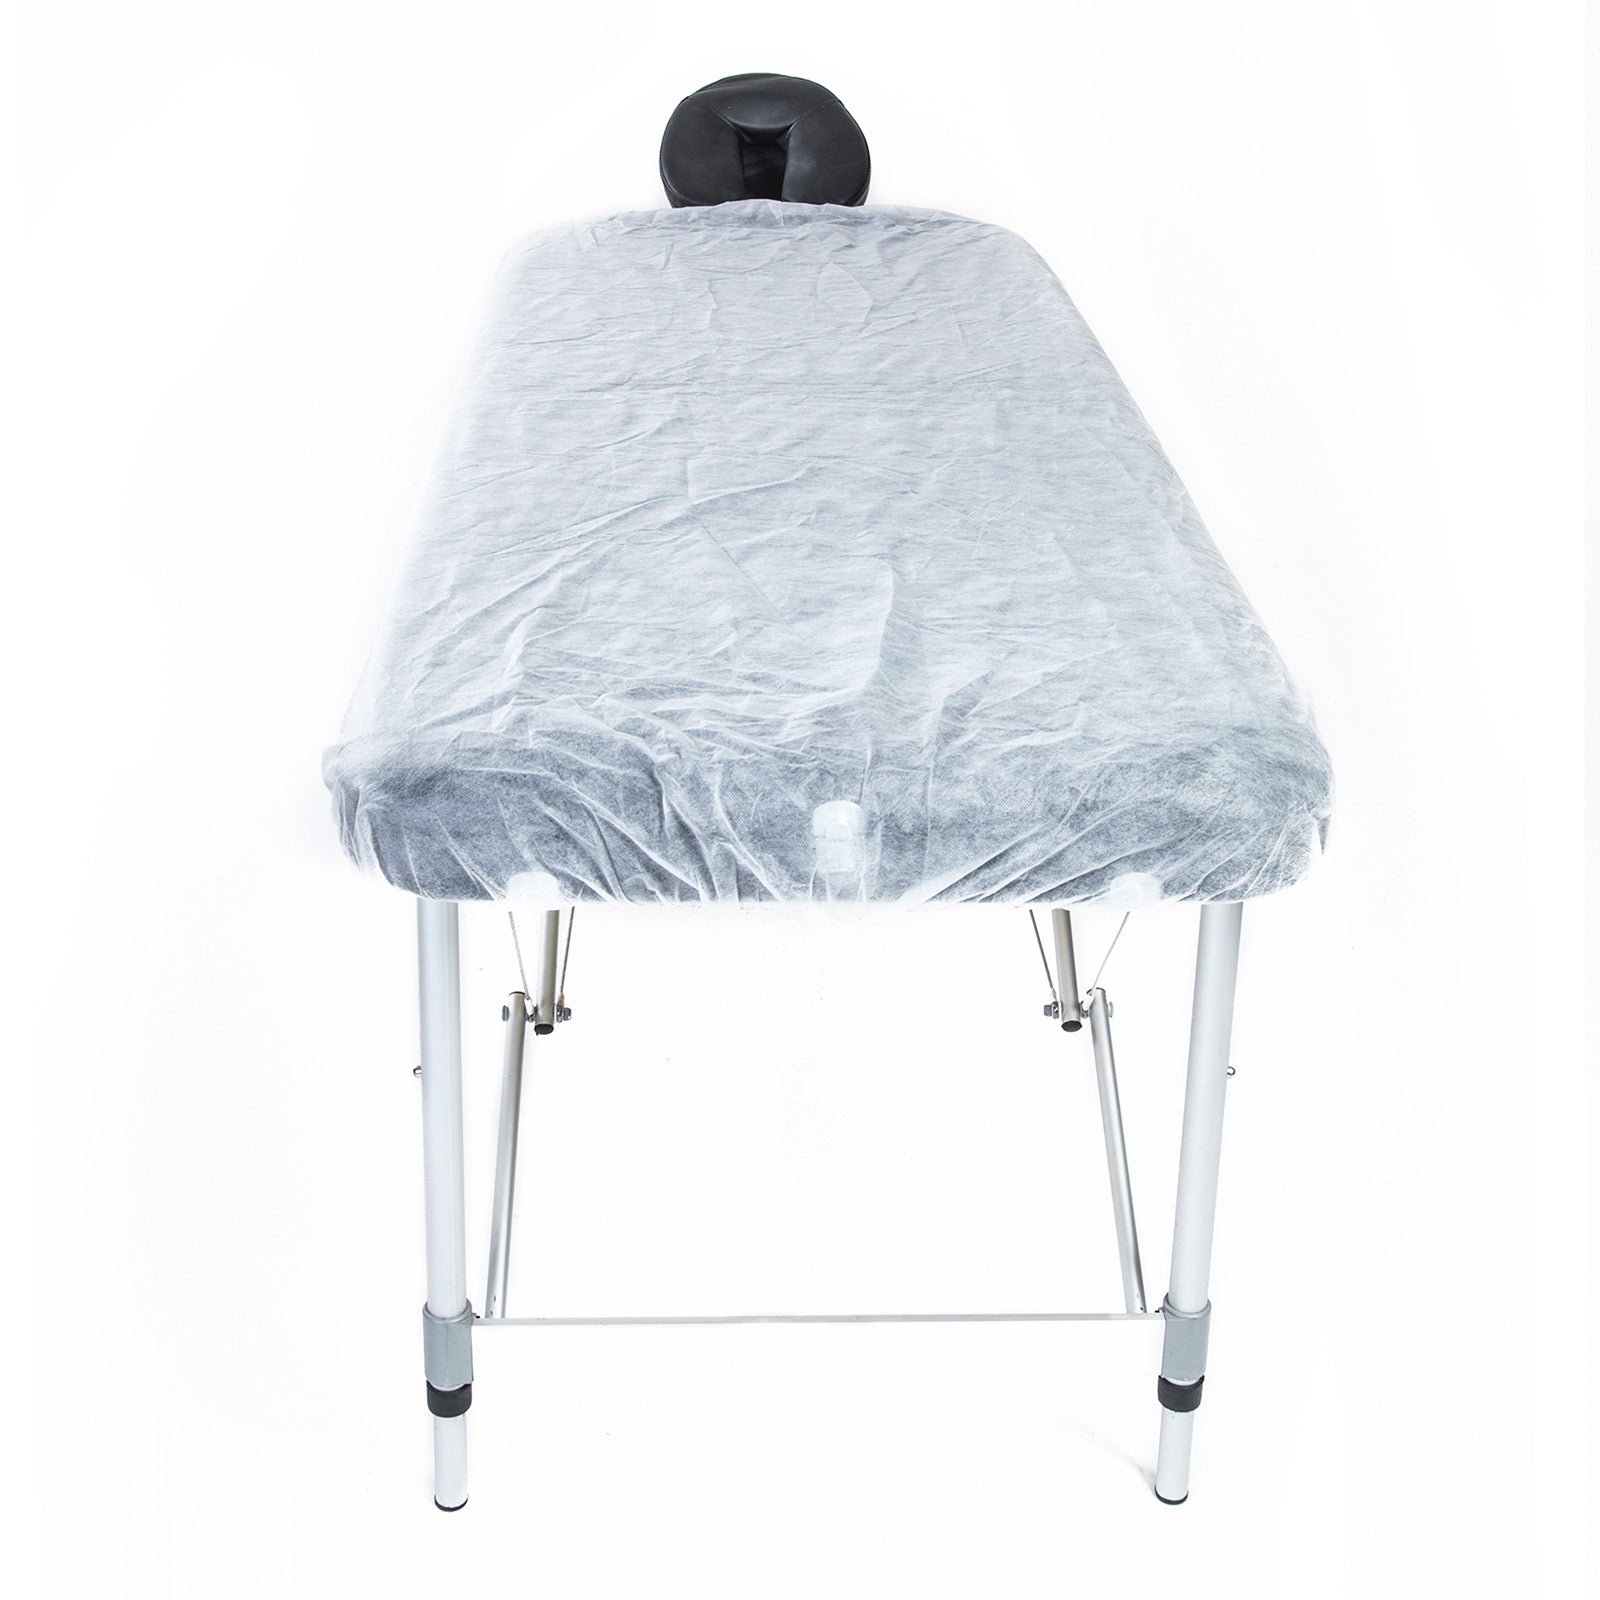 forever-beauty-30pcs-disposable-massage-table-sheet-cover-180cm-x-55cm